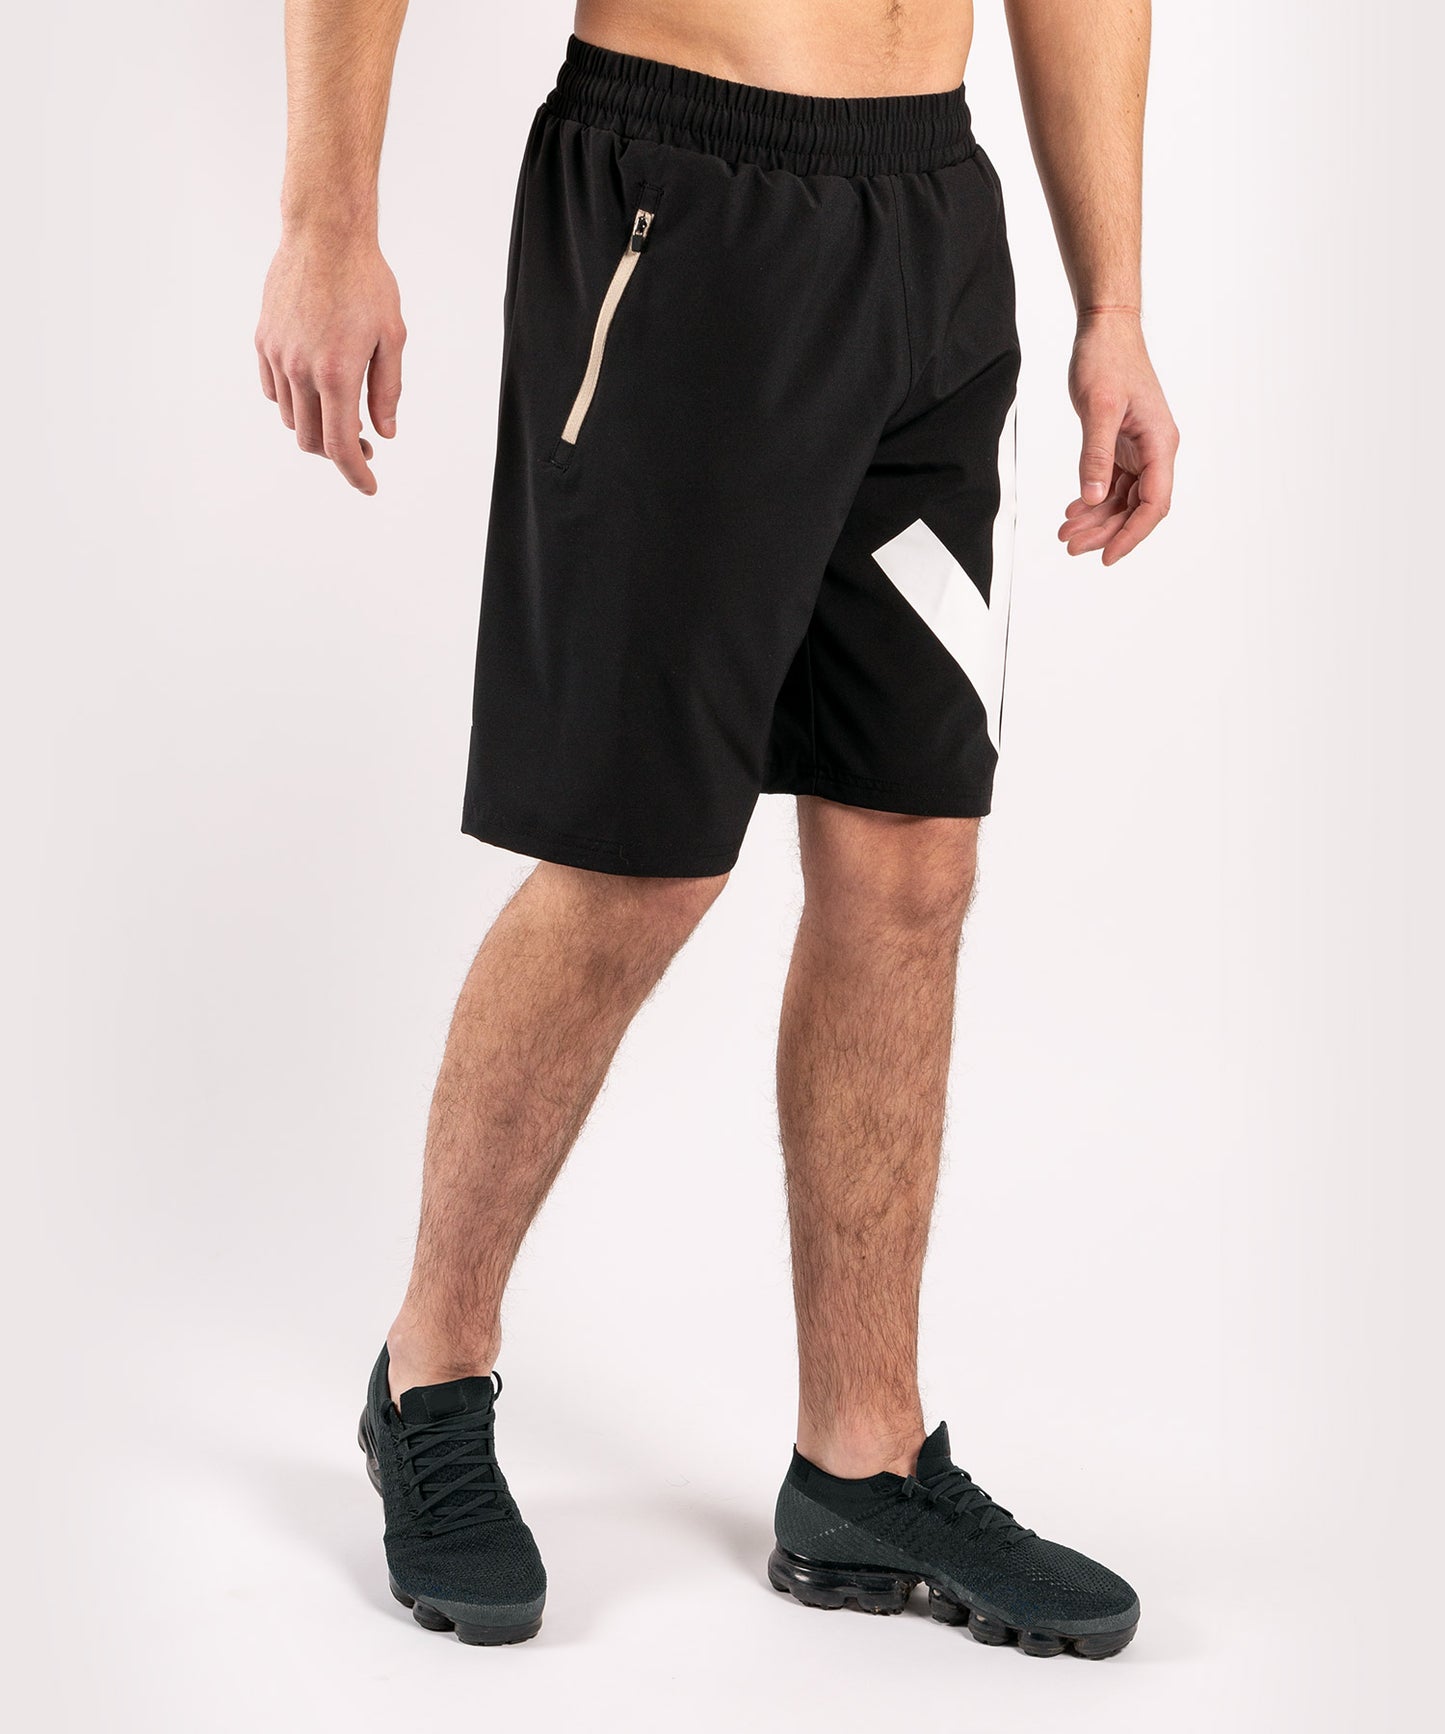 Pantalones cortos deportivos Venum Arrow Loma Signature Collection - Negro/Blanco